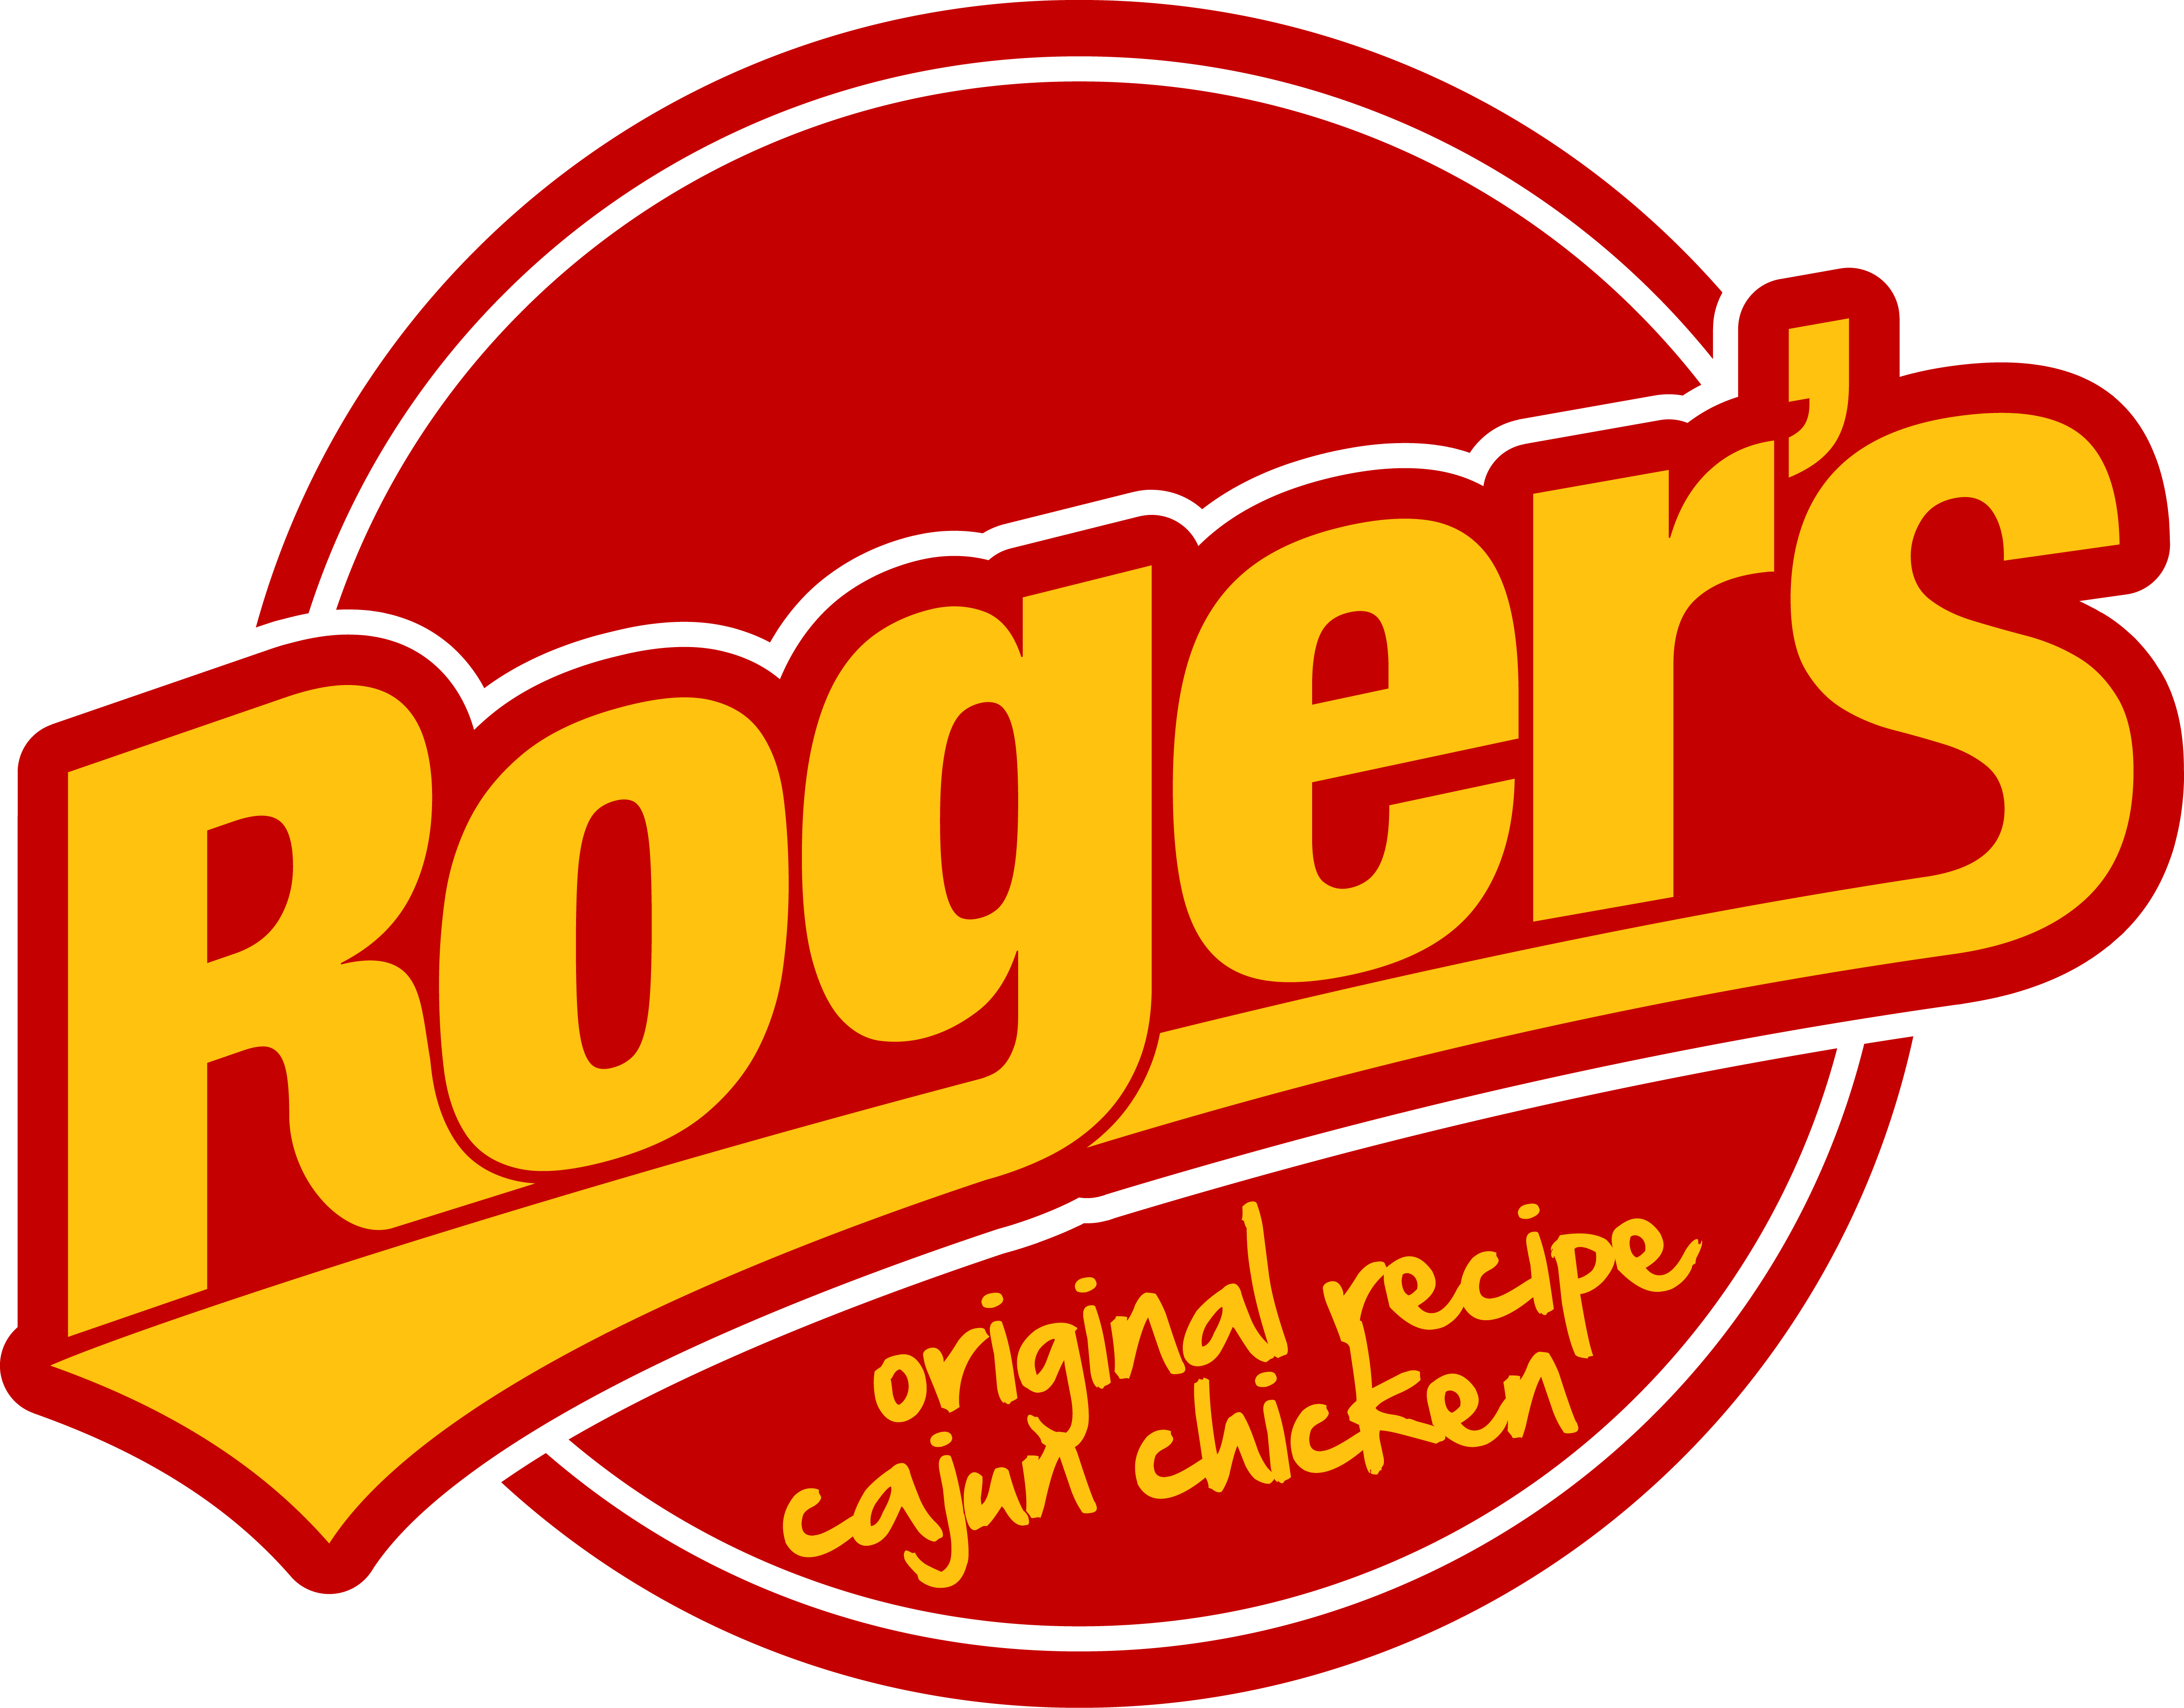 Rogers Chicken